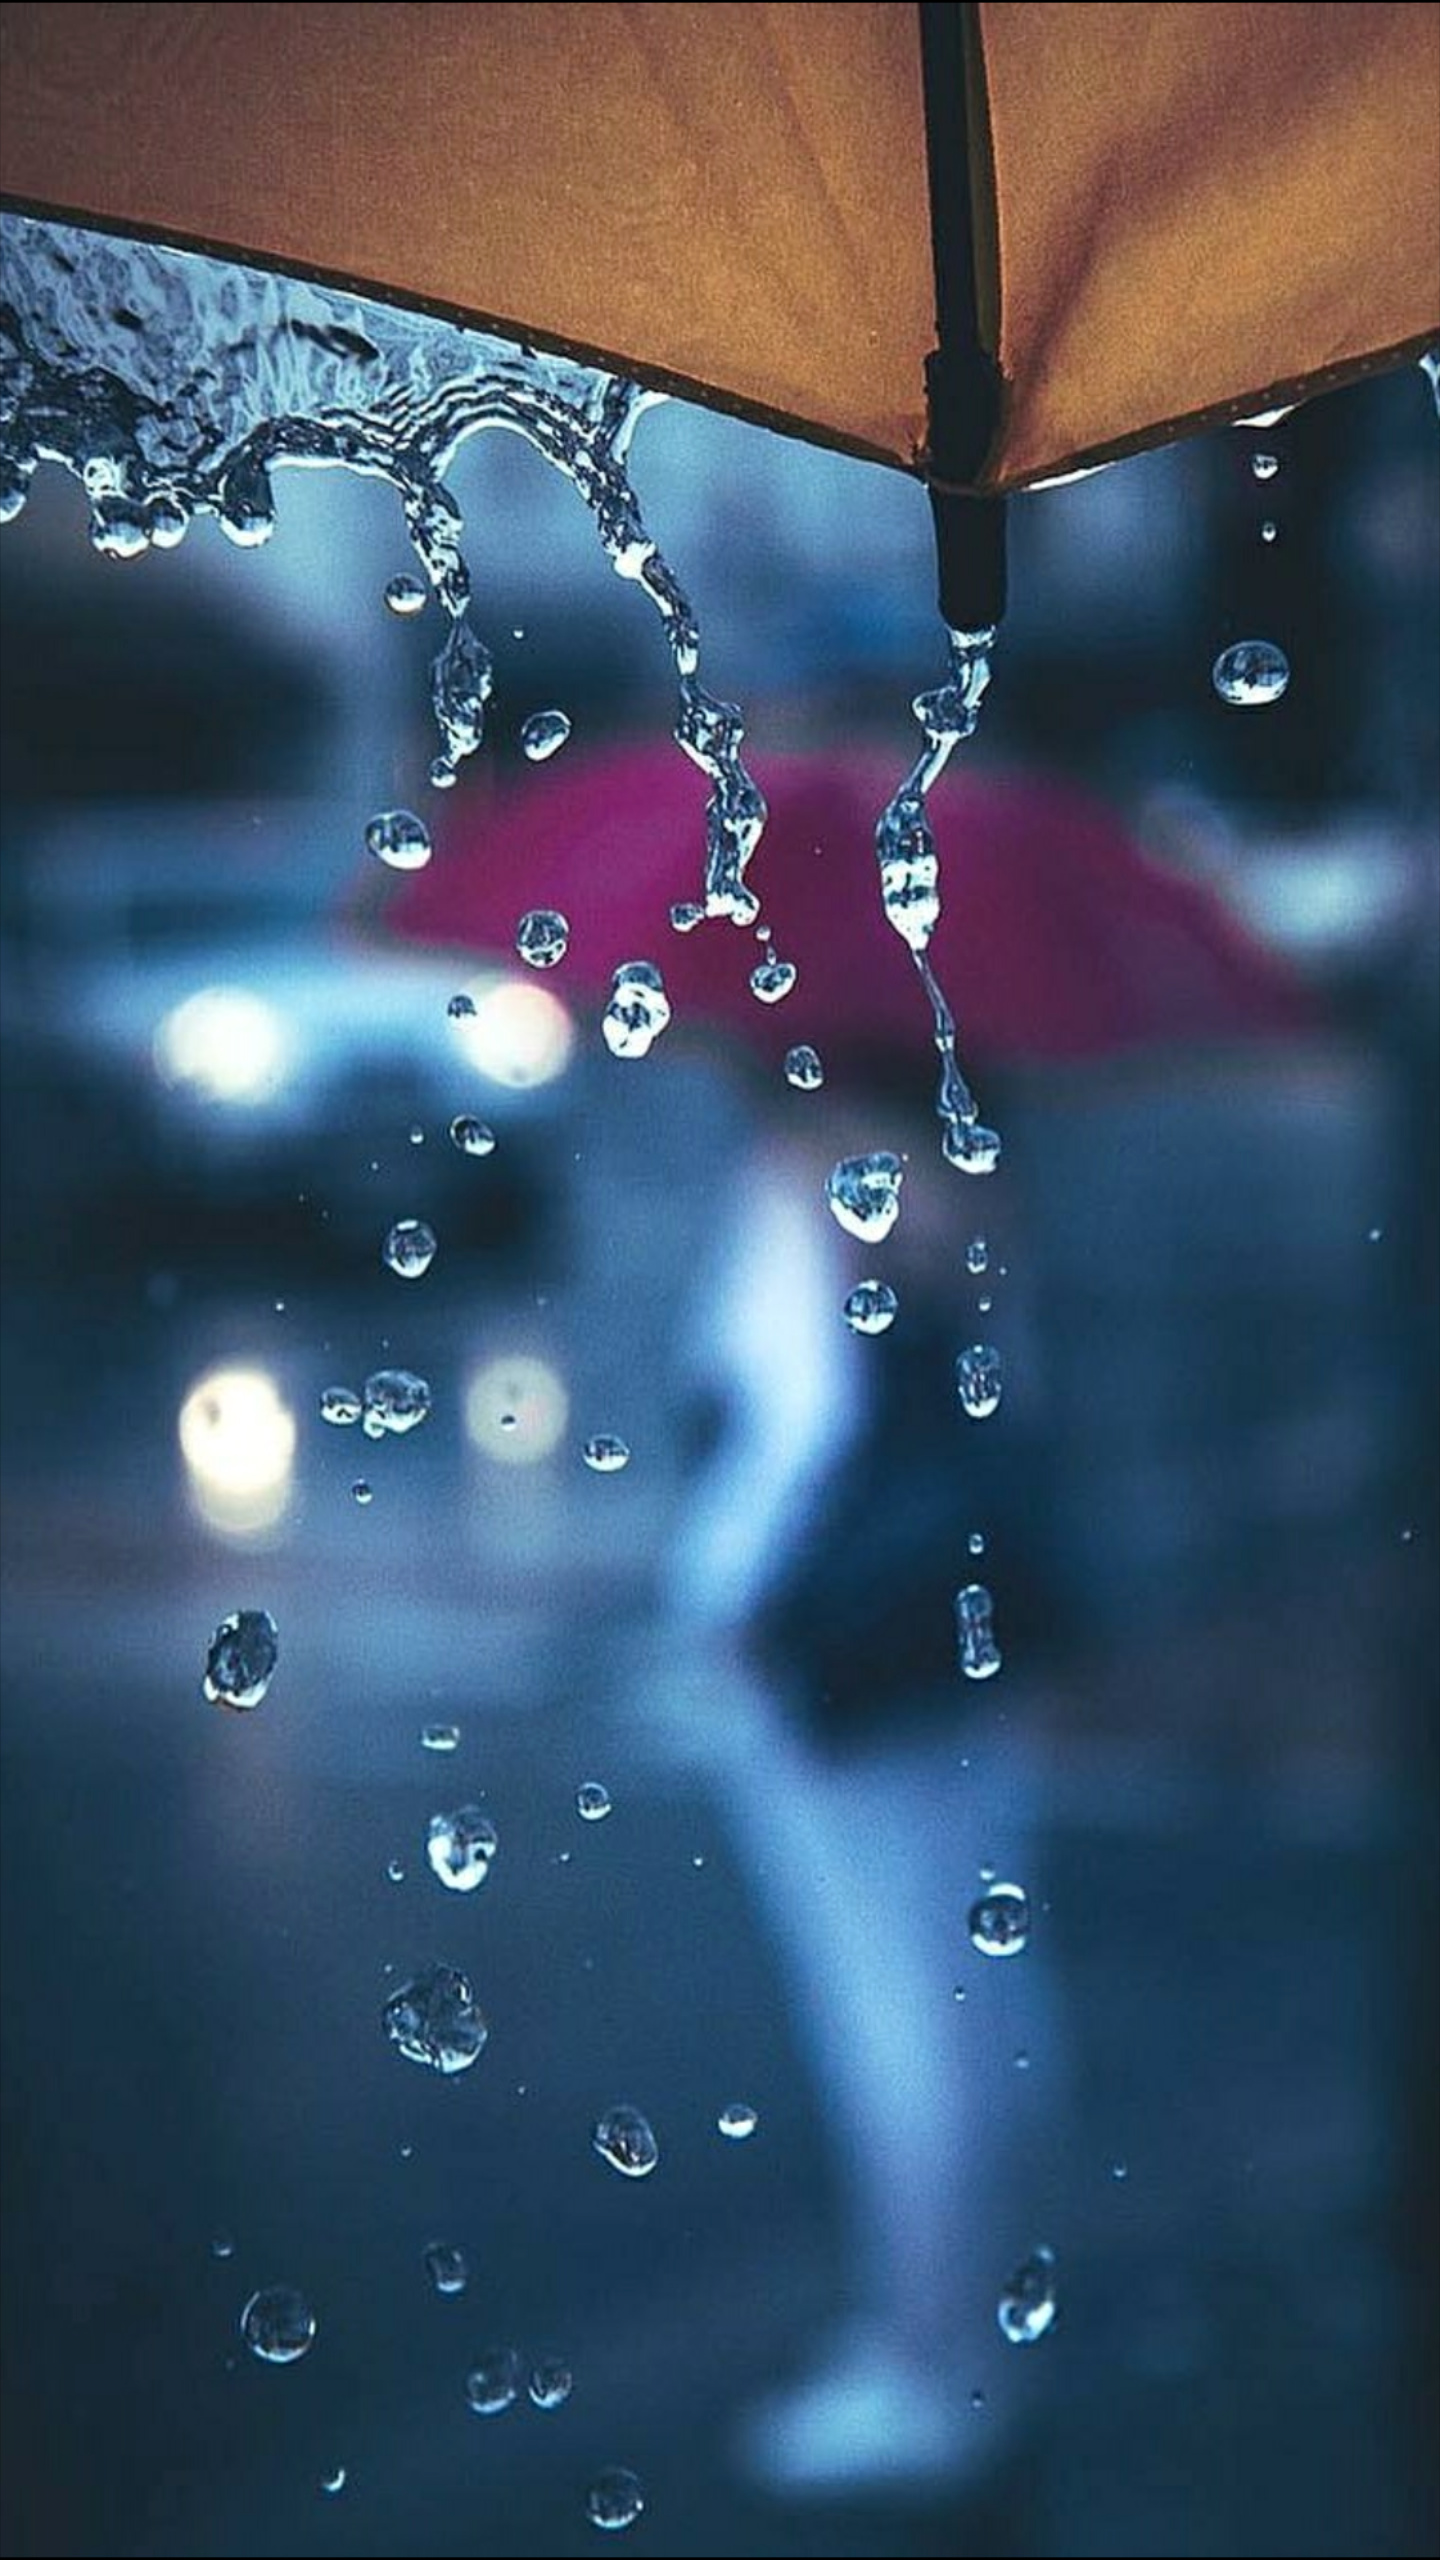 Rainy Day - Lock Screen Rain Iphone - HD Wallpaper 